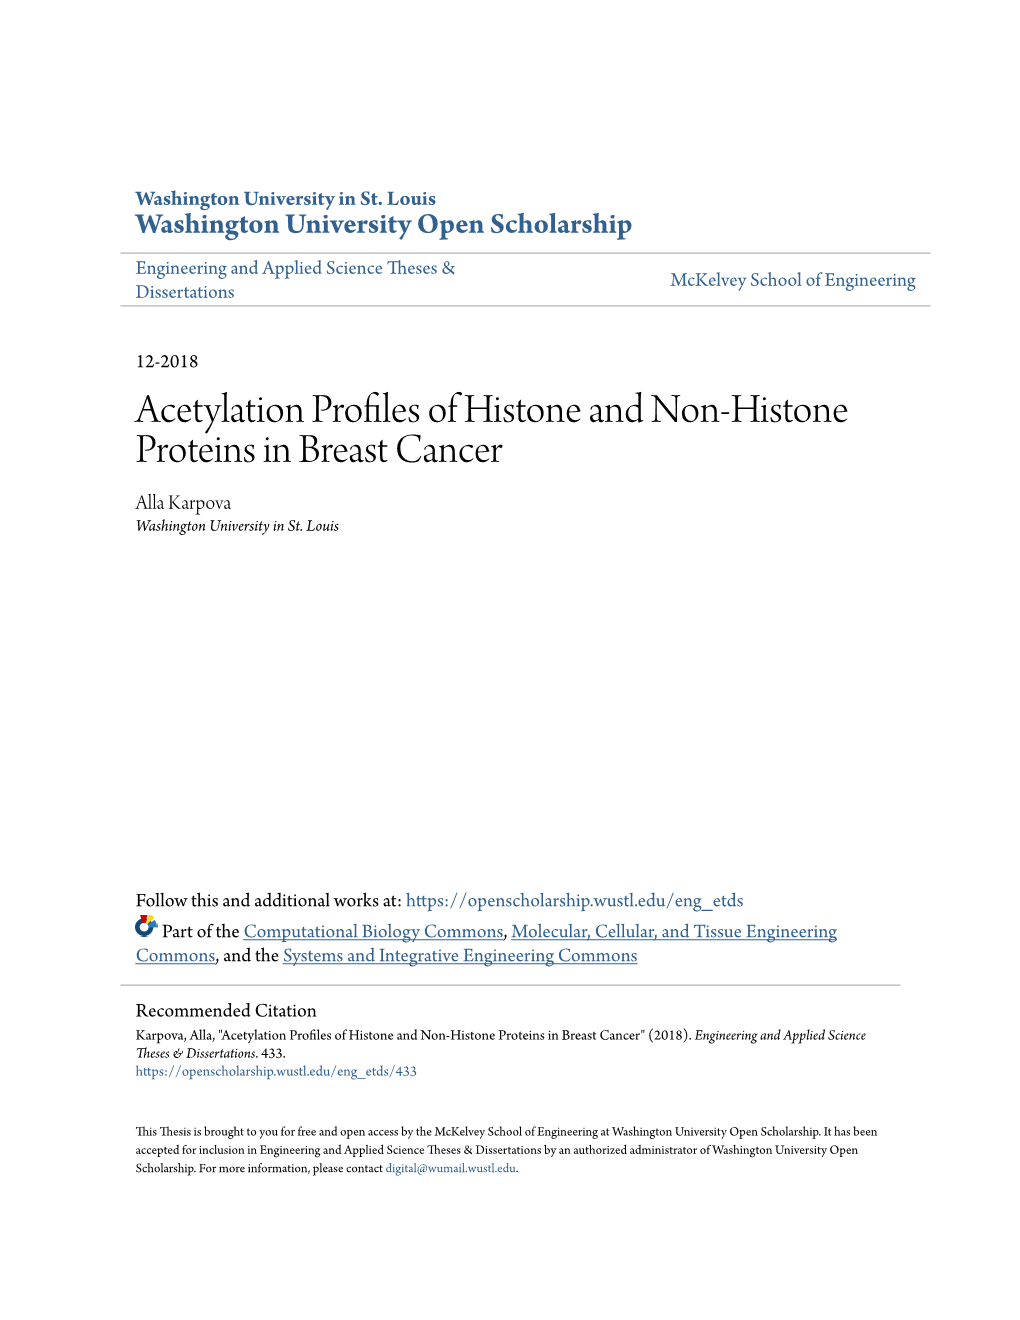 Acetylation Profiles of Histone and Non-Histone Proteins in Breast Cancer Alla Karpova Washington University in St